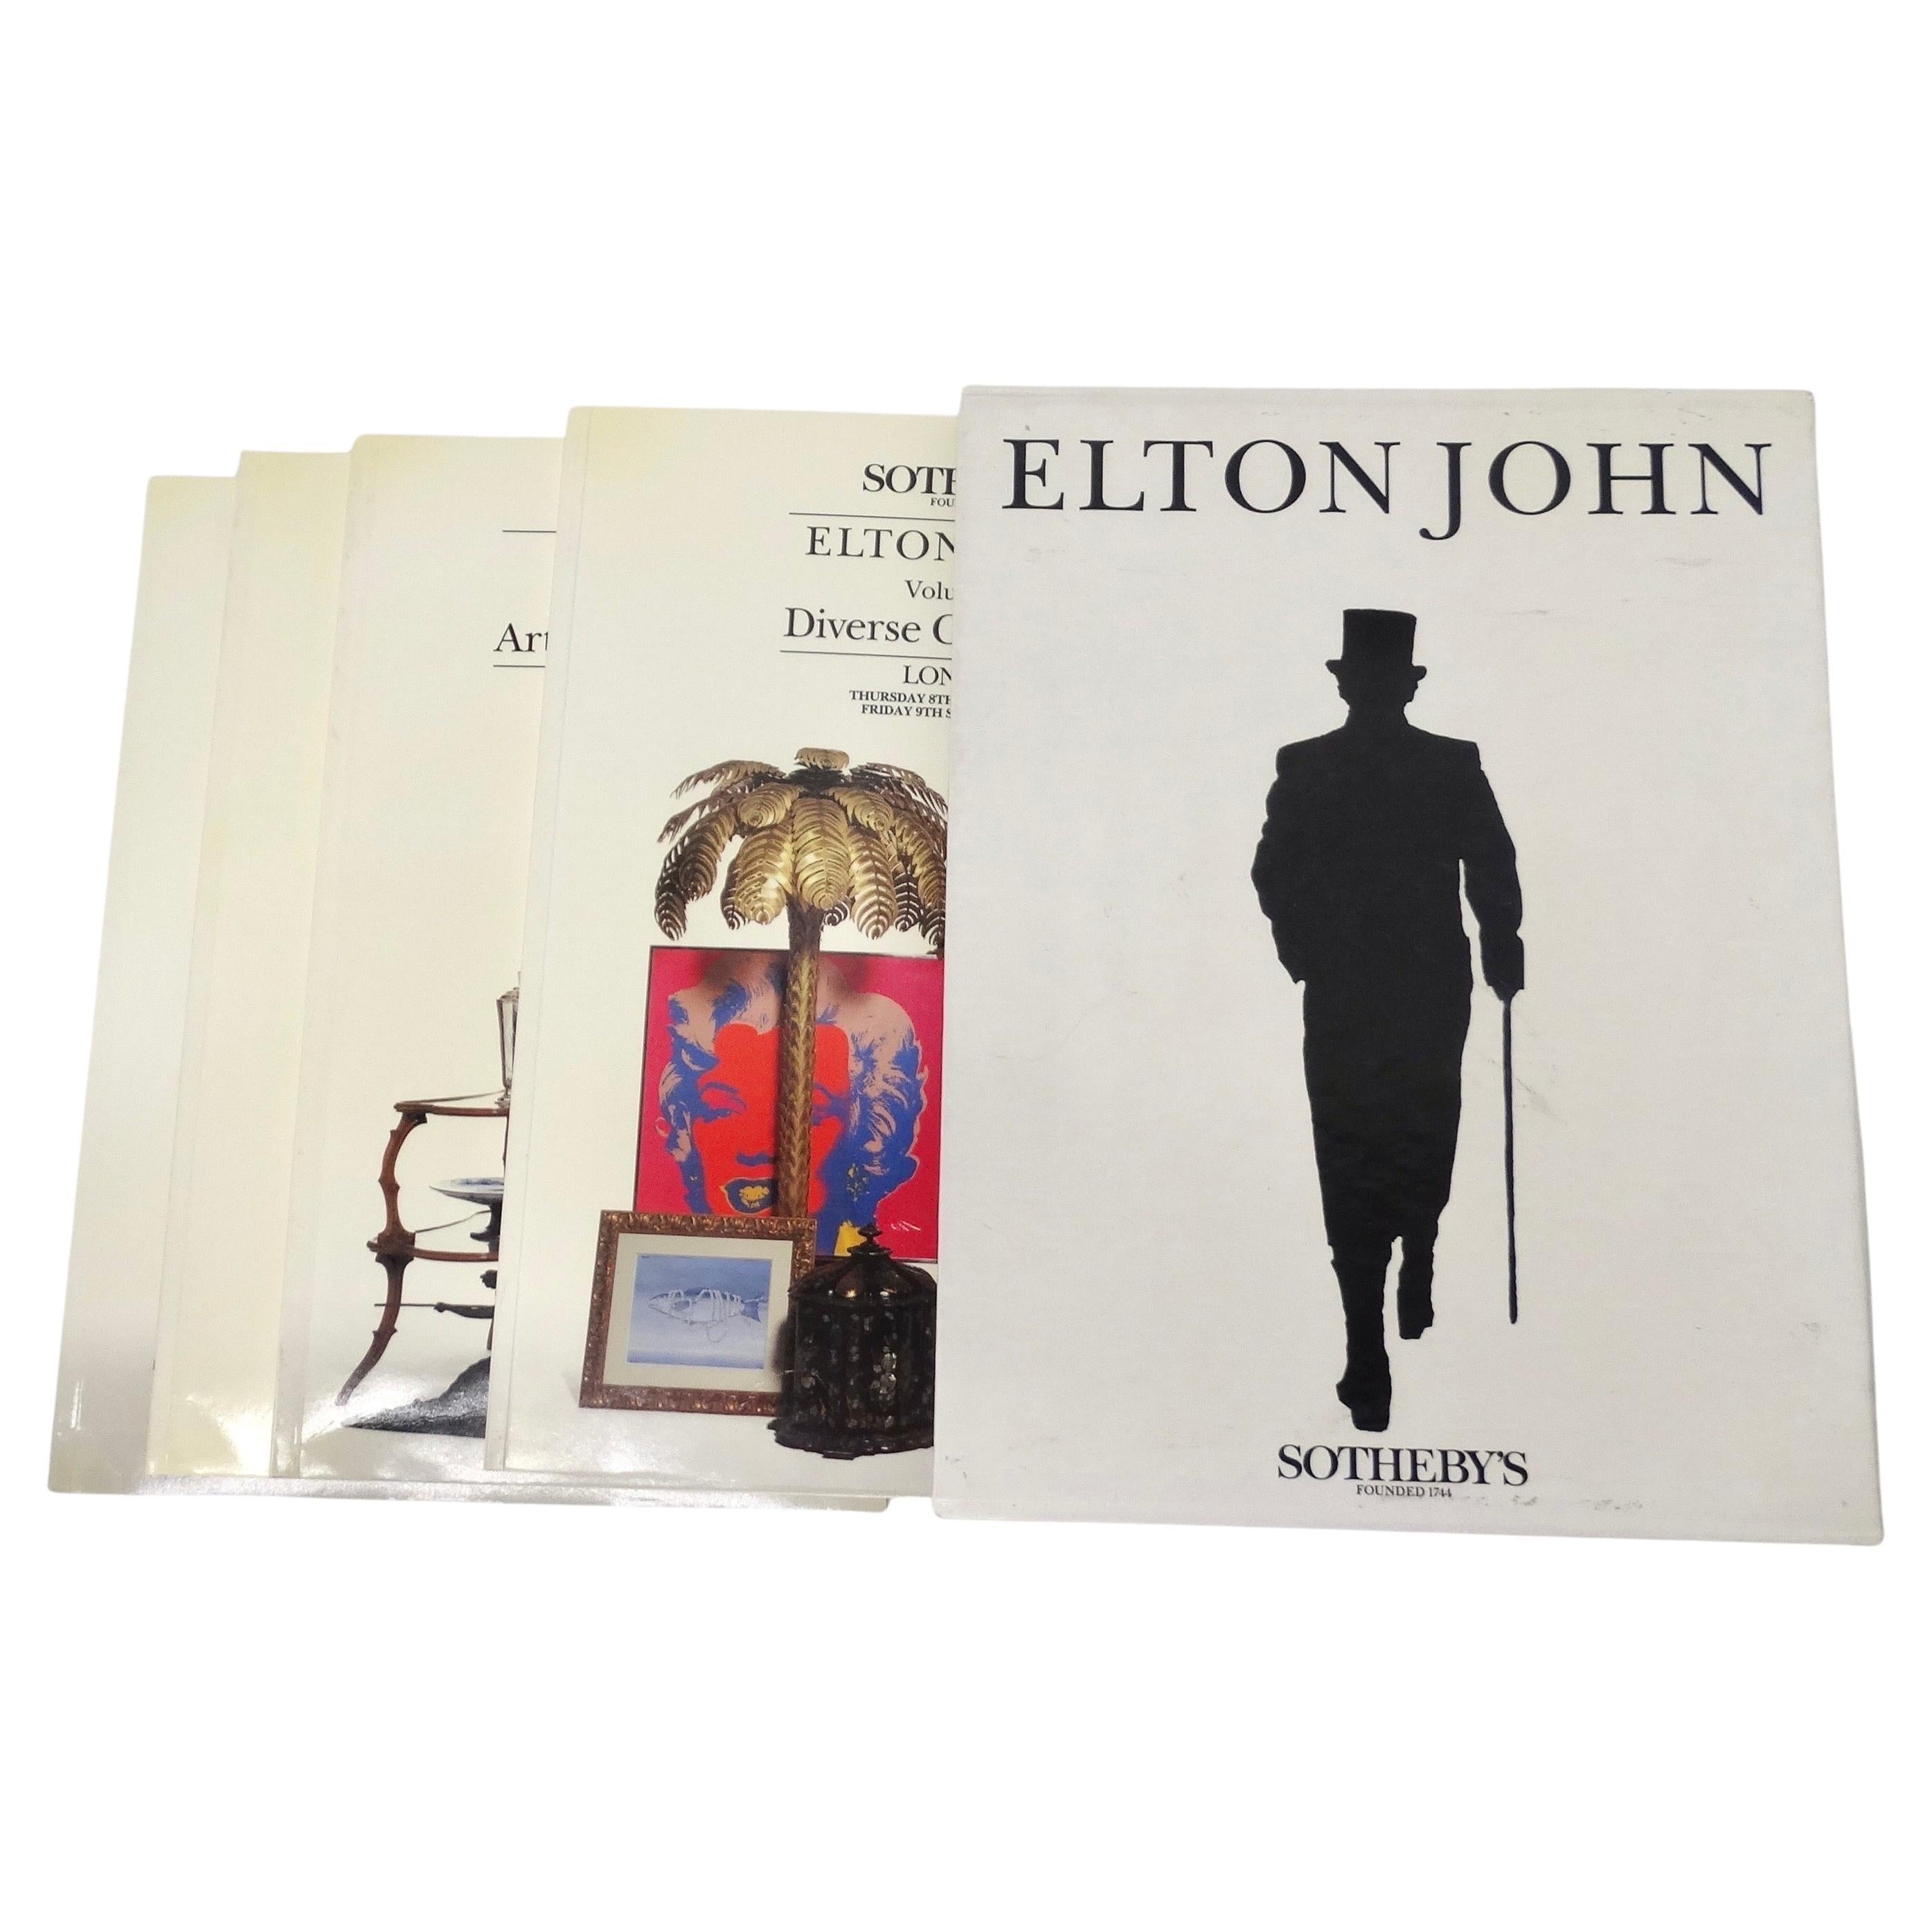 Collection de livres de Sothebys Elton John 1988